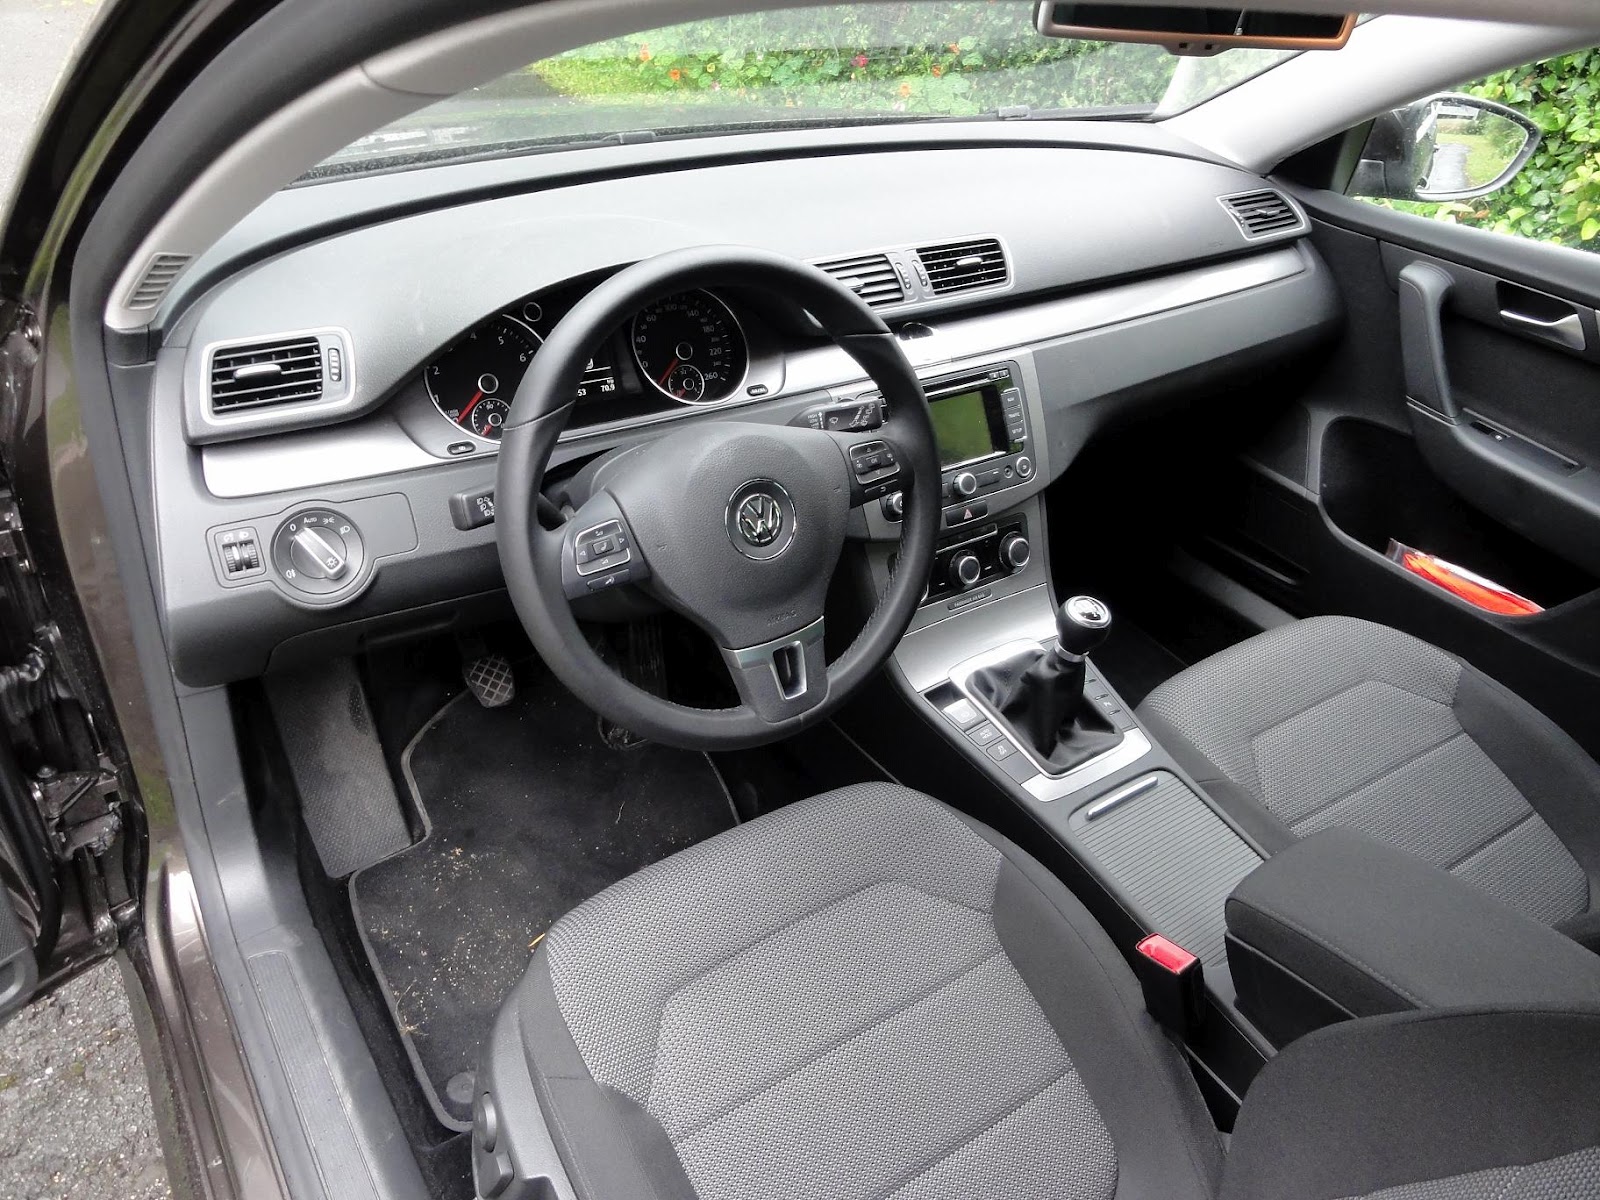 Guitigefilmpjes: Car review: Volkswagen Passat 1.4 TSI ...